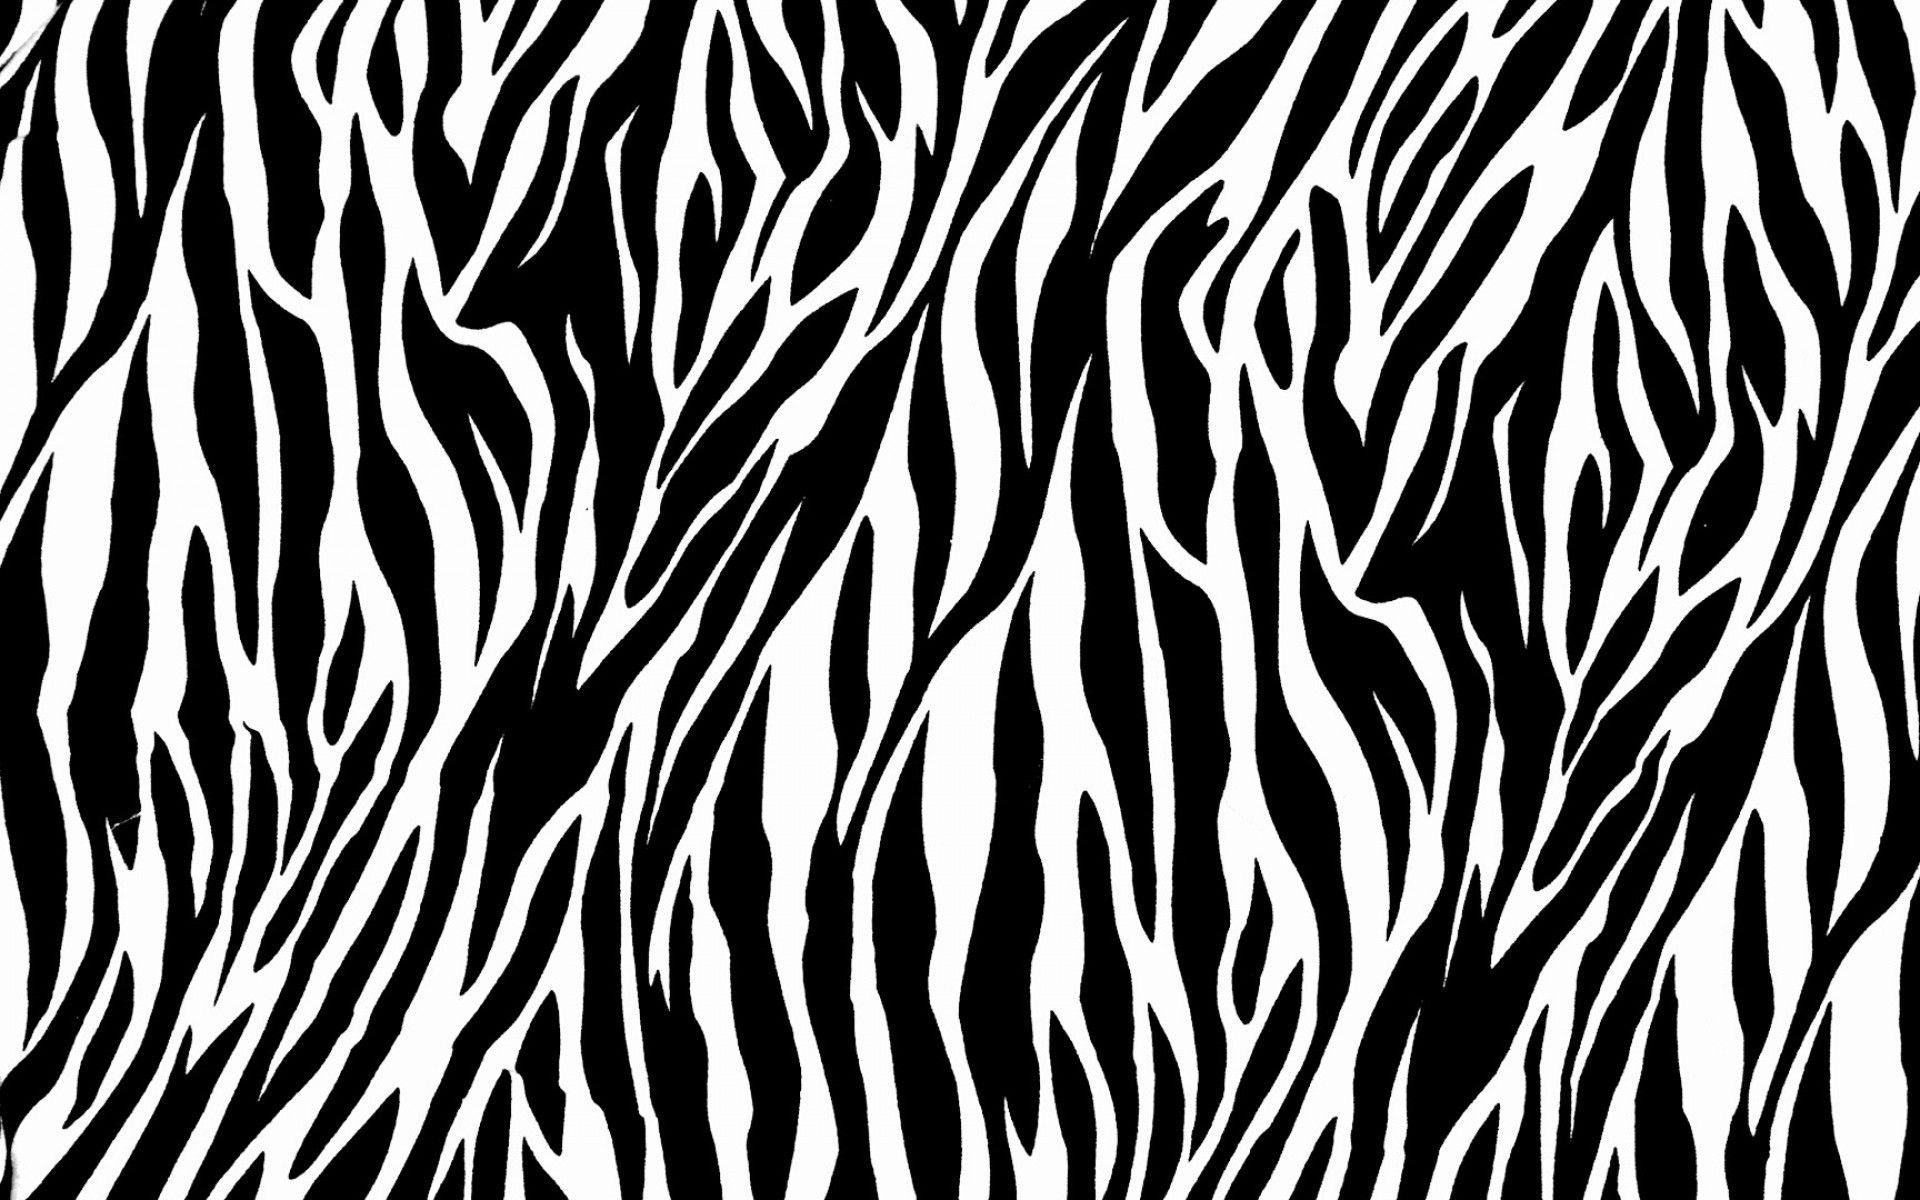 Zebra backgroundDownload free stunning HD wallpaper